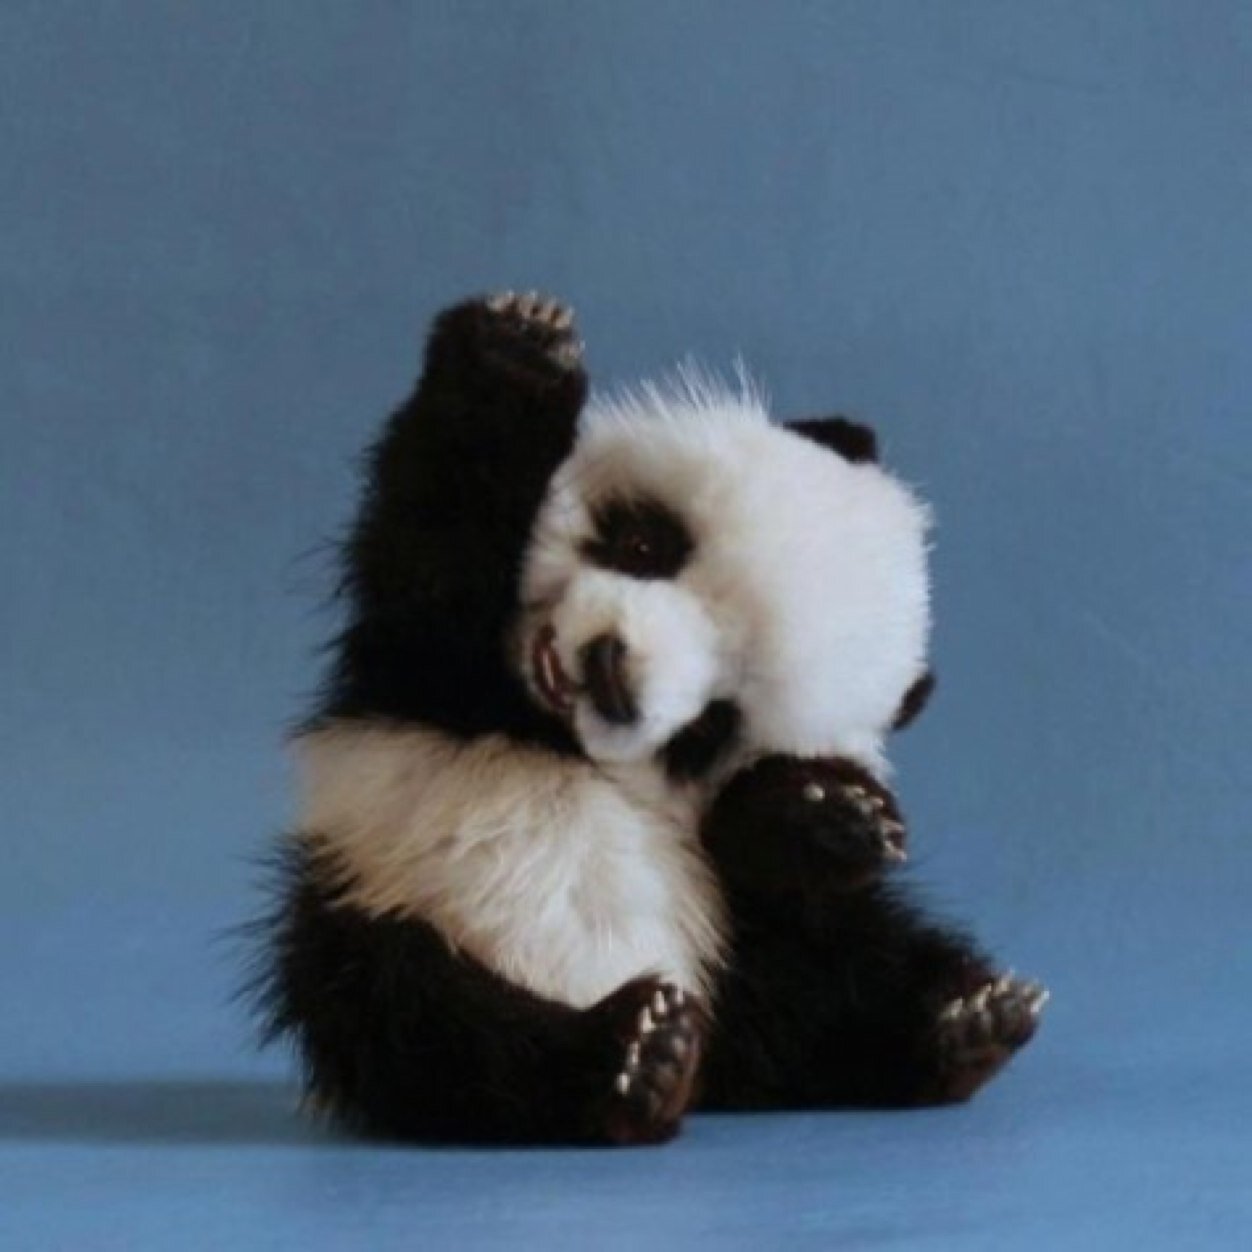 Pandas are amazing!!
Follow if you love pandas too! ❤️